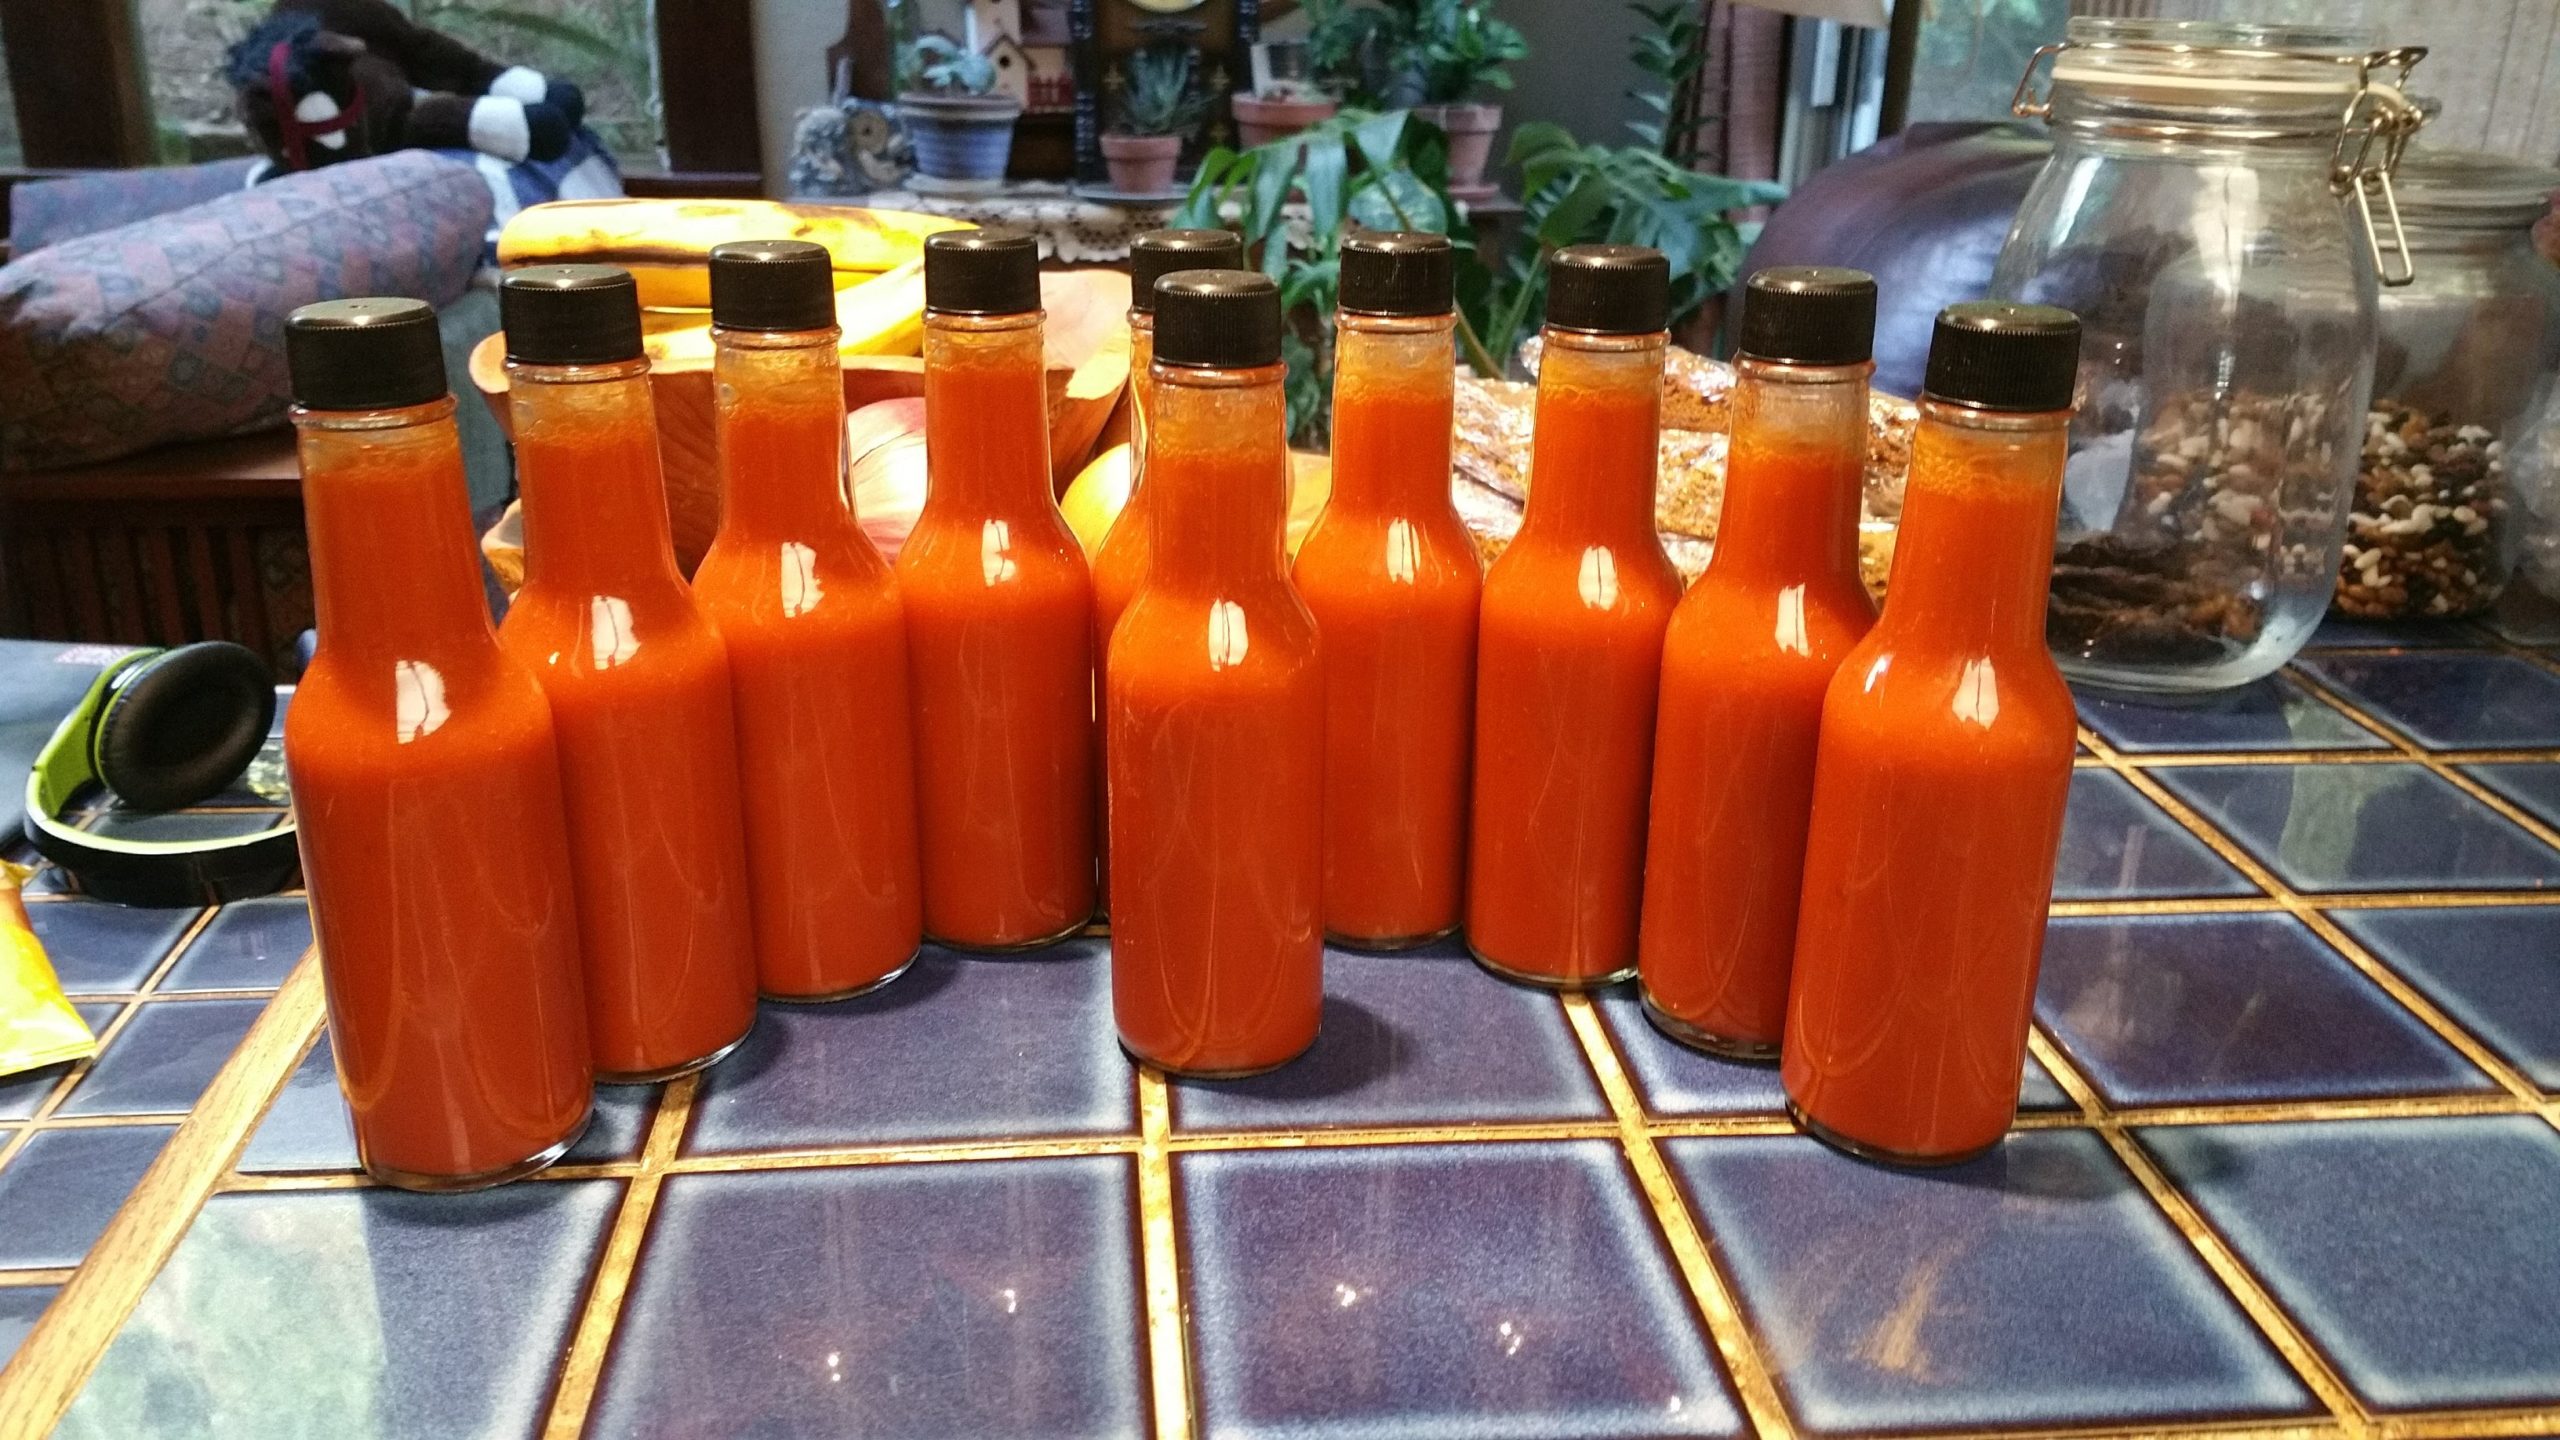 https://sagesacre.com/wp-content/uploads/2020/03/00-batch-19-fermented-hot-pepper-sauce-scaled.jpg